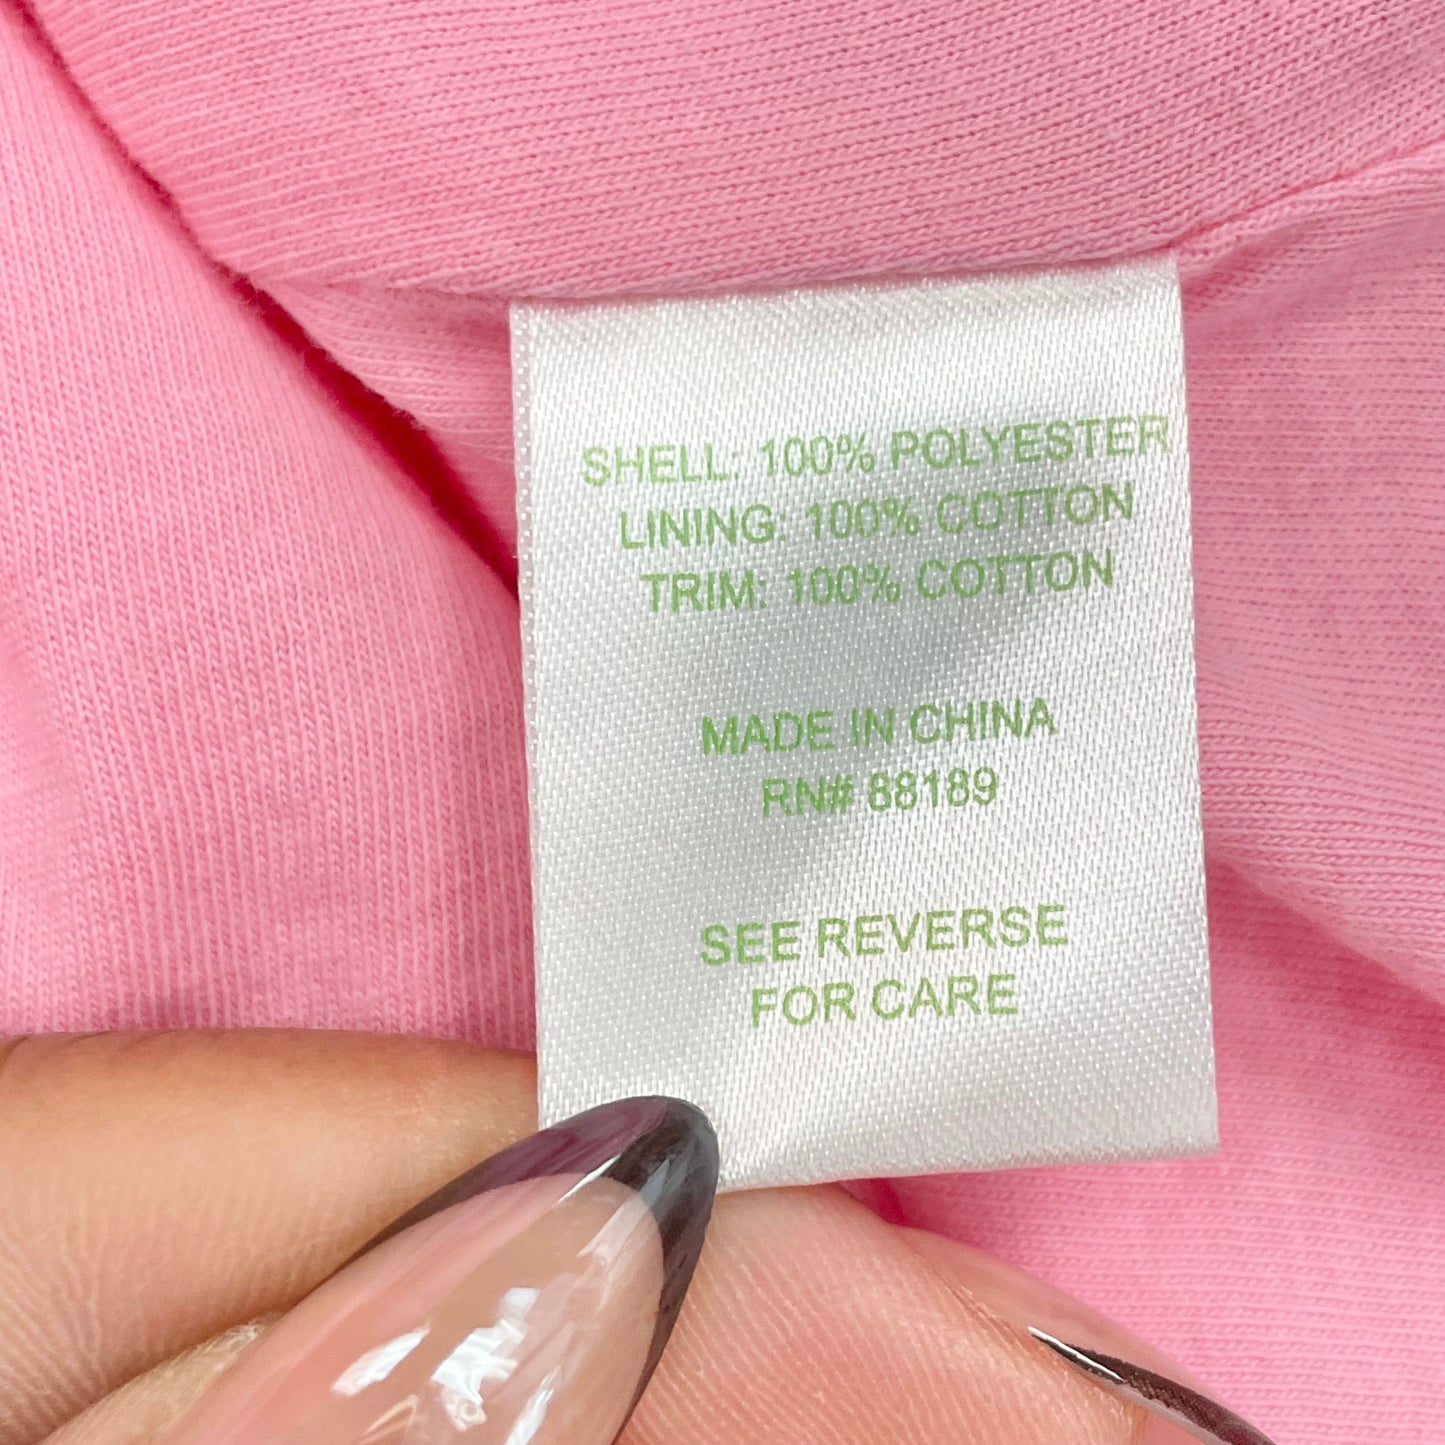 Pink Vest Designer By Lilly Pulitzer, Size: M